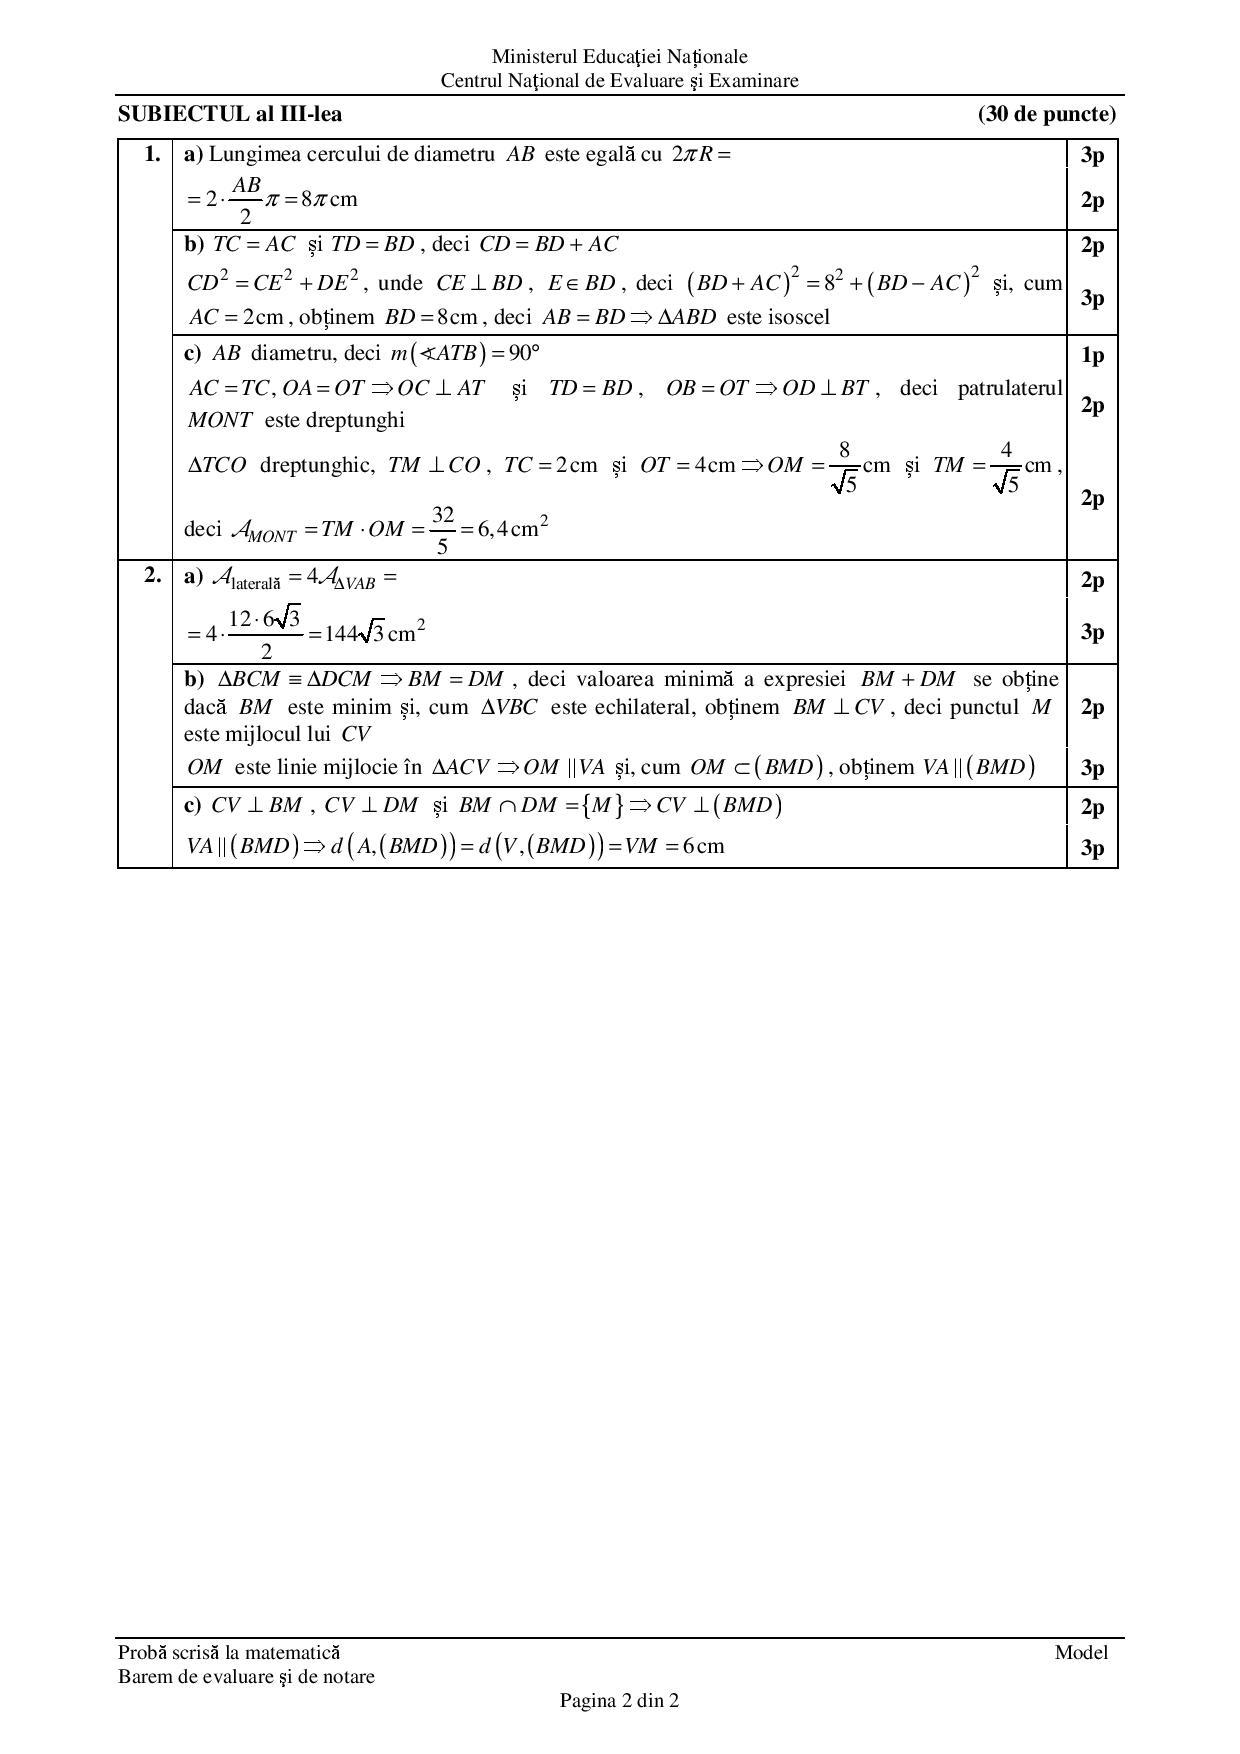 EN_matematica_2020_bar_model_LRO-page-002.jpg